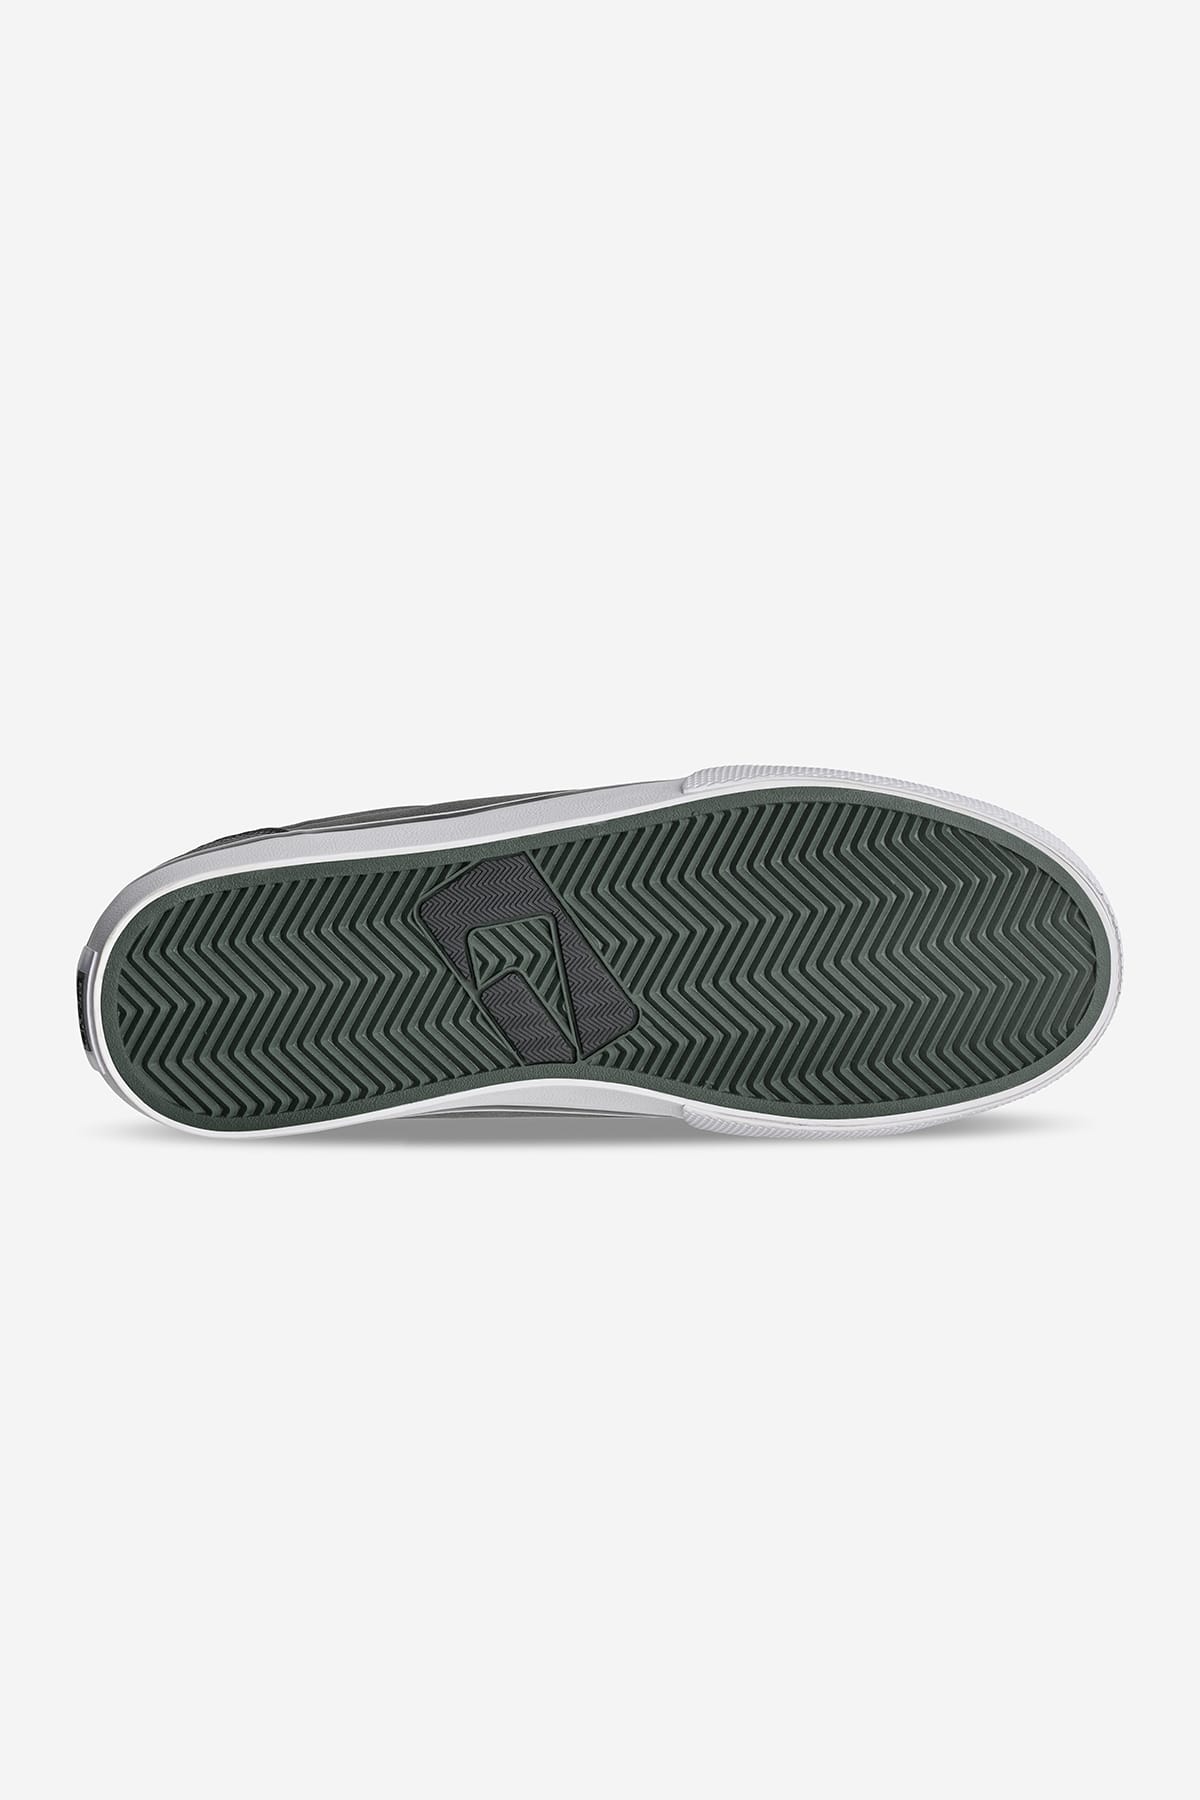 Globe - Gs - Grau/Distress - skateboard Schuhe